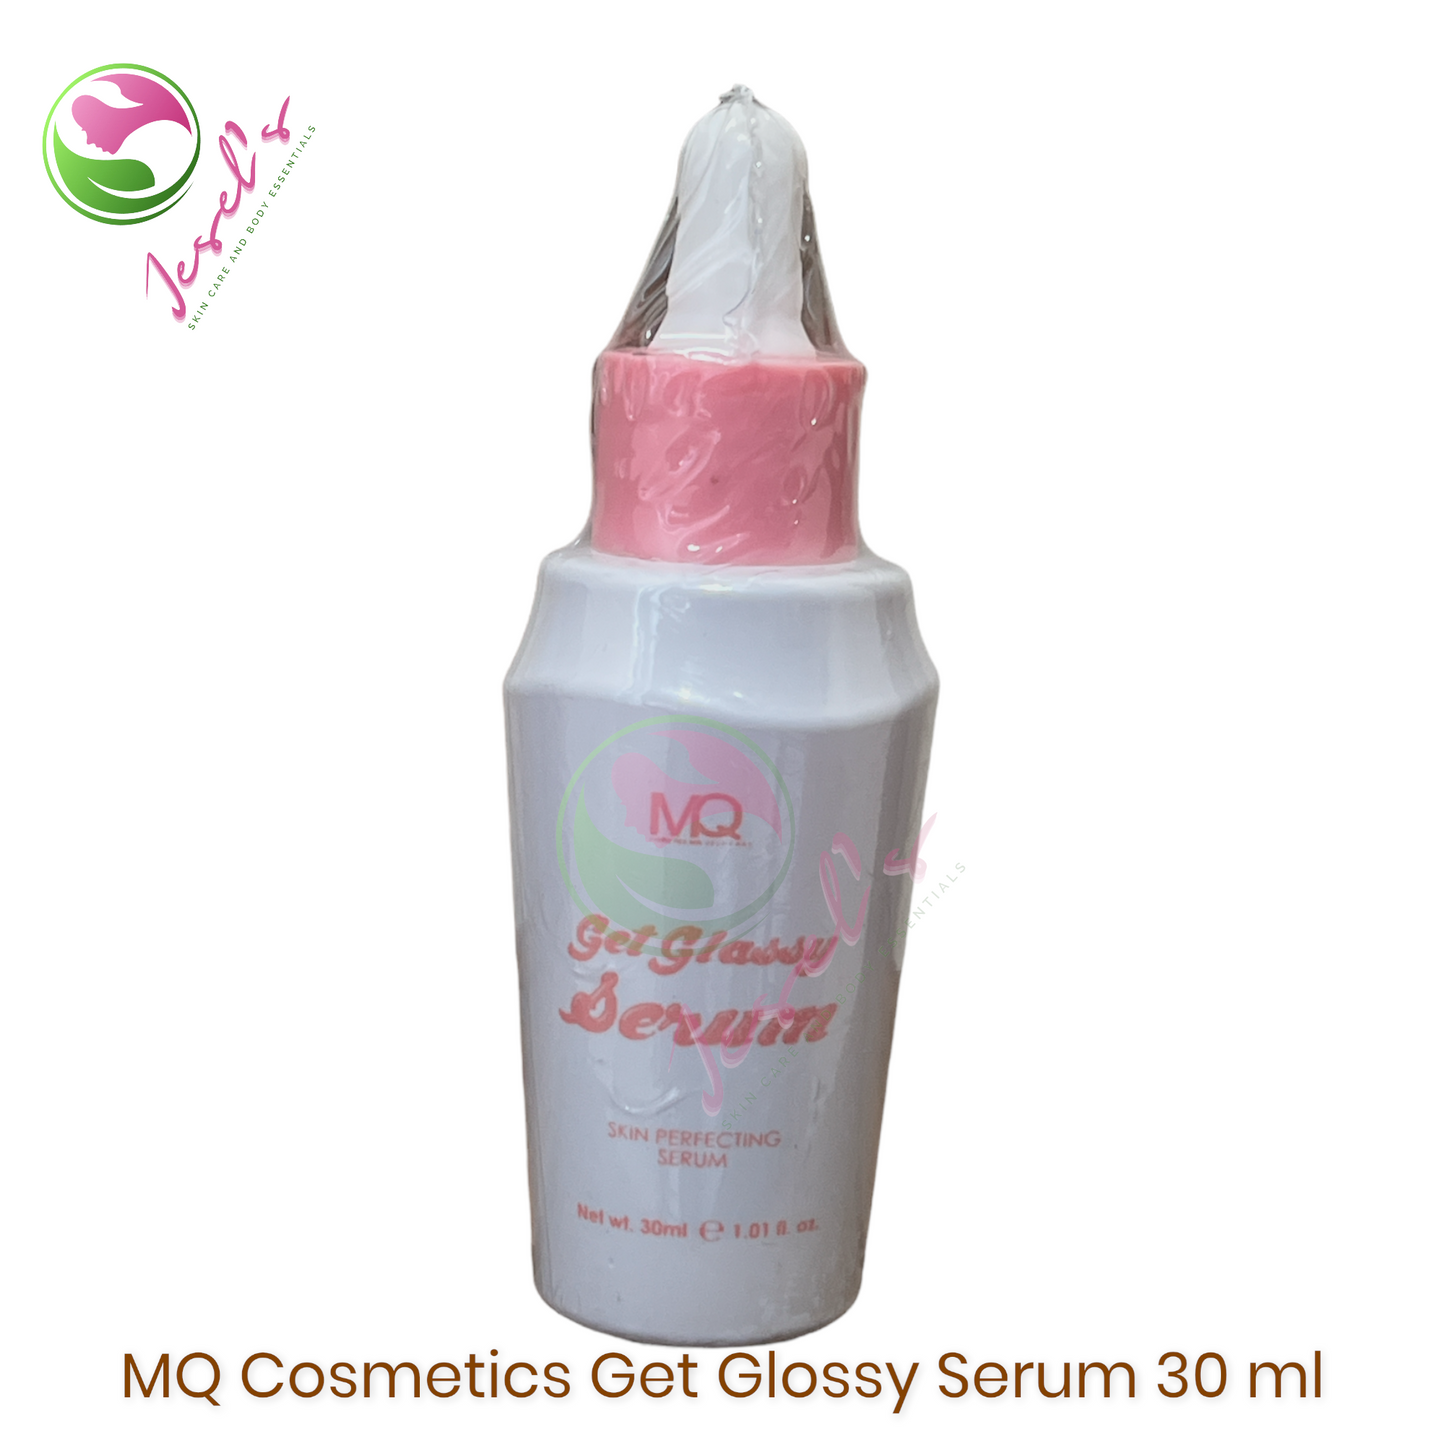 MQ Cosmetics Get Glassy Serum 30ml